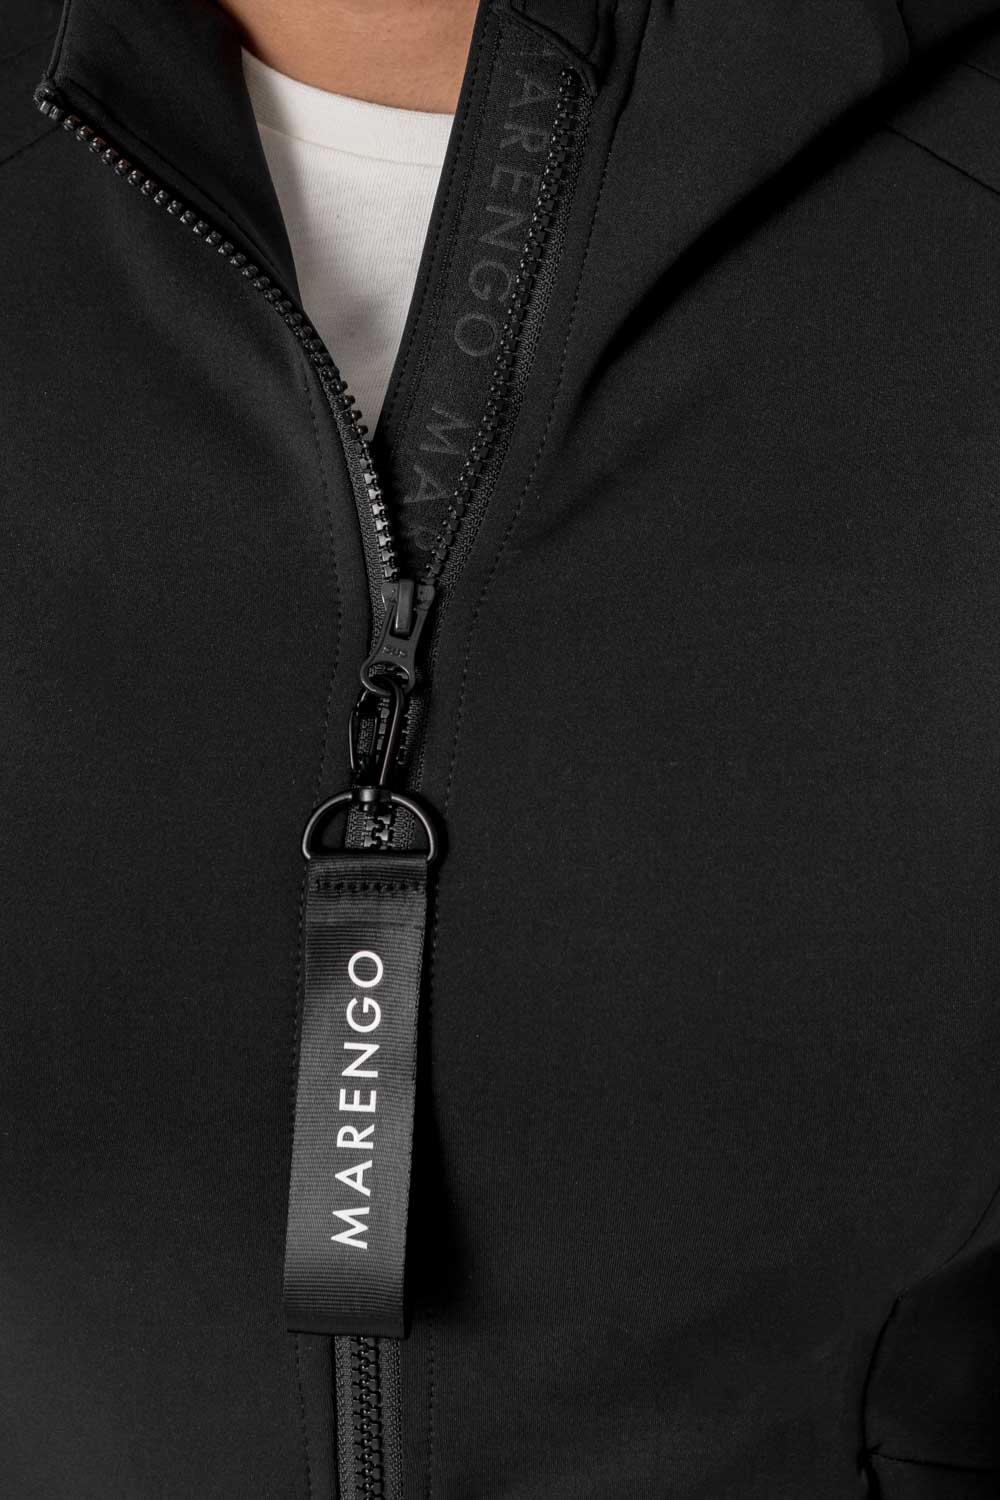 Black hybrid jacket zipper puller